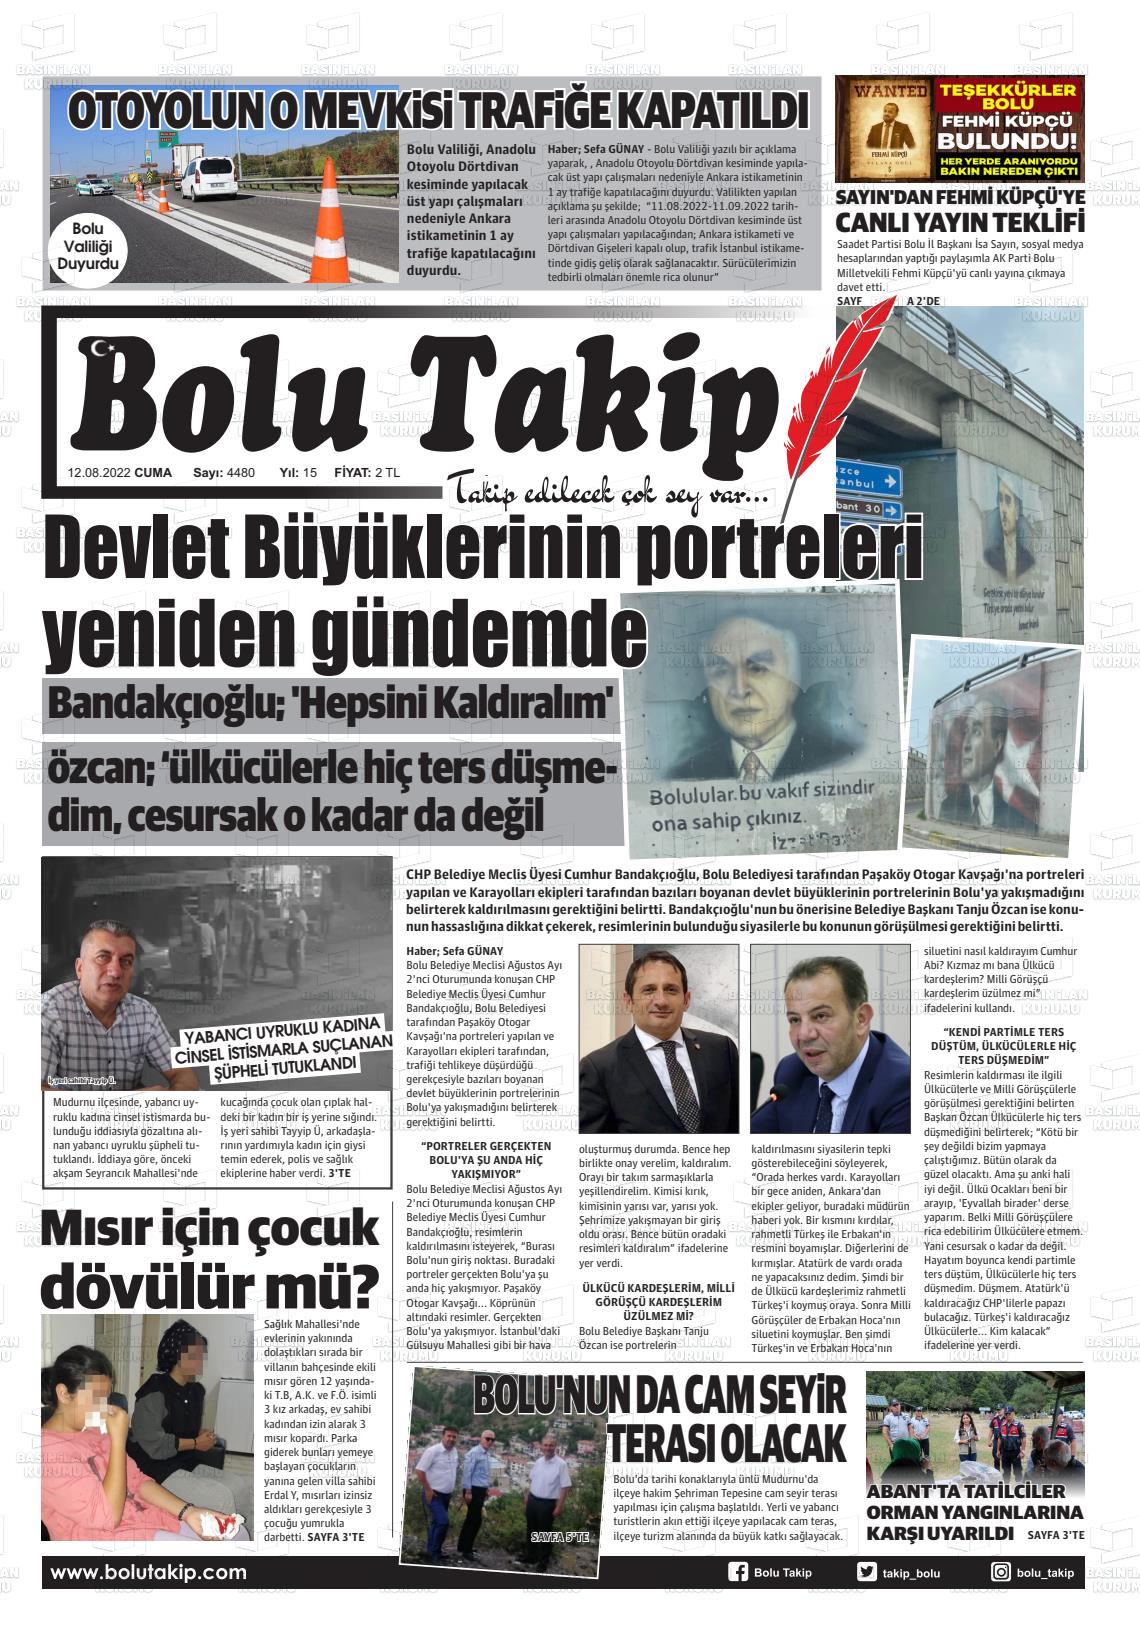 12 Ağustos 2022 Bolu Takip Gazete Manşeti